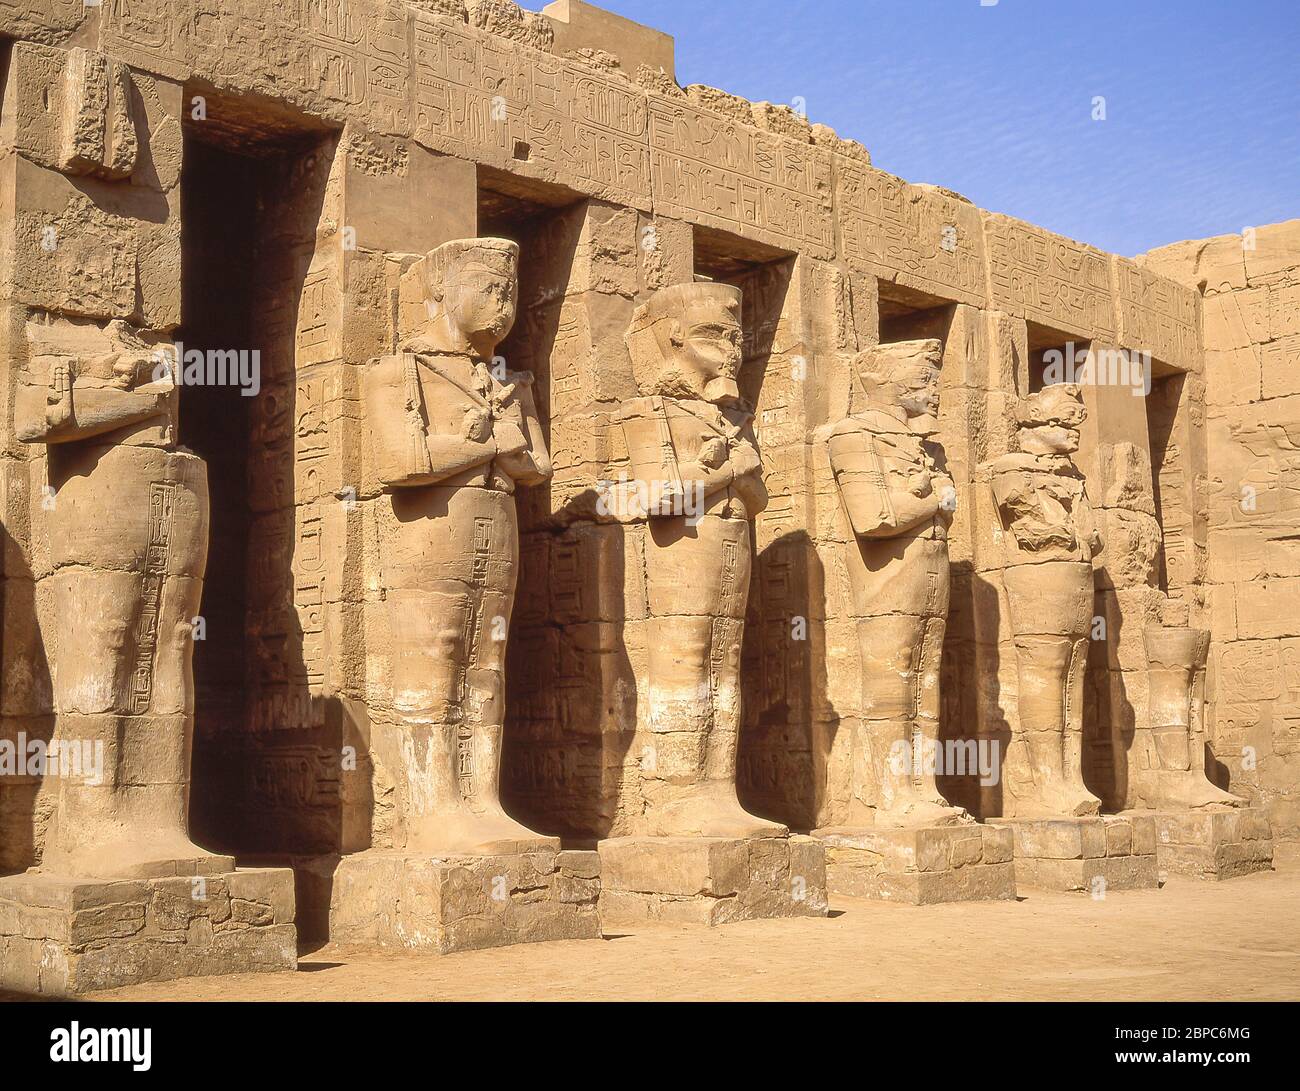 Pillars of Osiris in courtyard of Temple of Ramses II, Karnak Temple Complex, El-Karnak, Karnak Governorate, Republic of Egypt Stock Photo